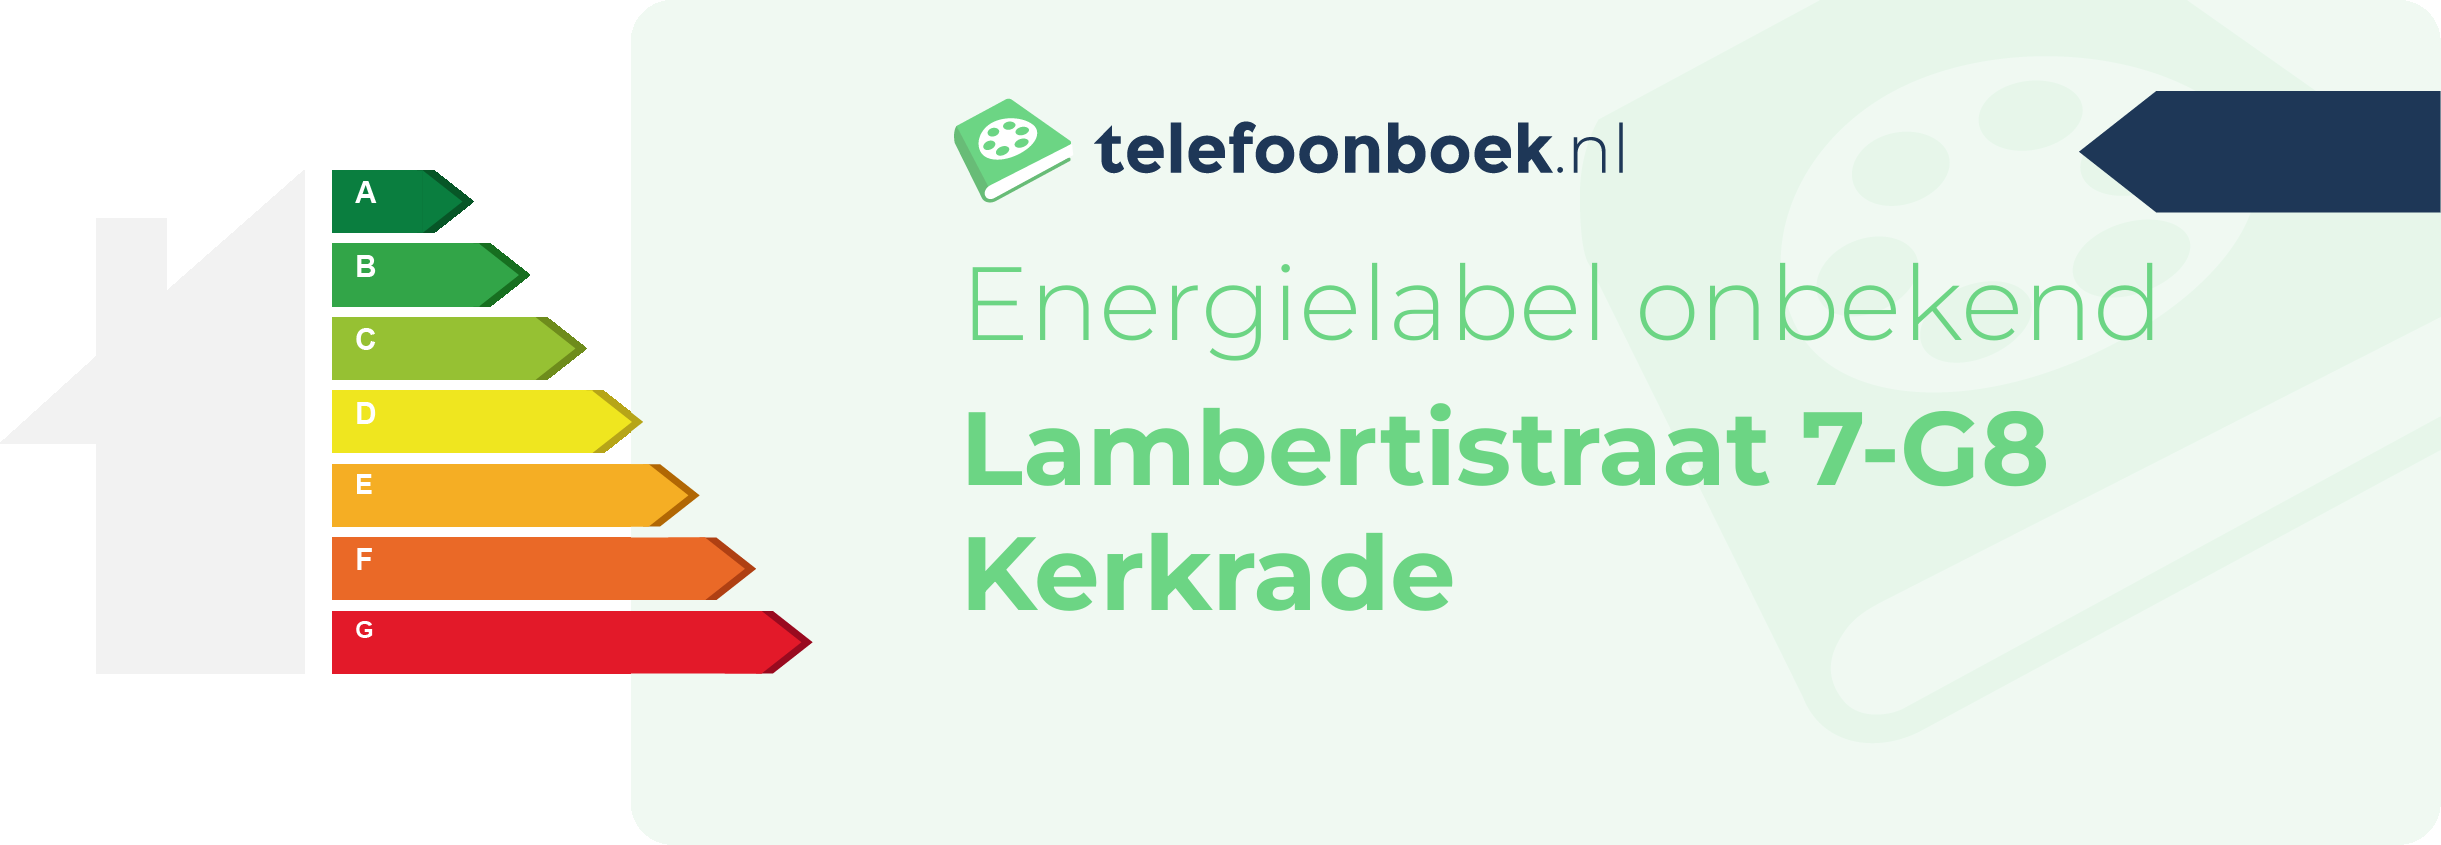 Energielabel Lambertistraat 7-G8 Kerkrade